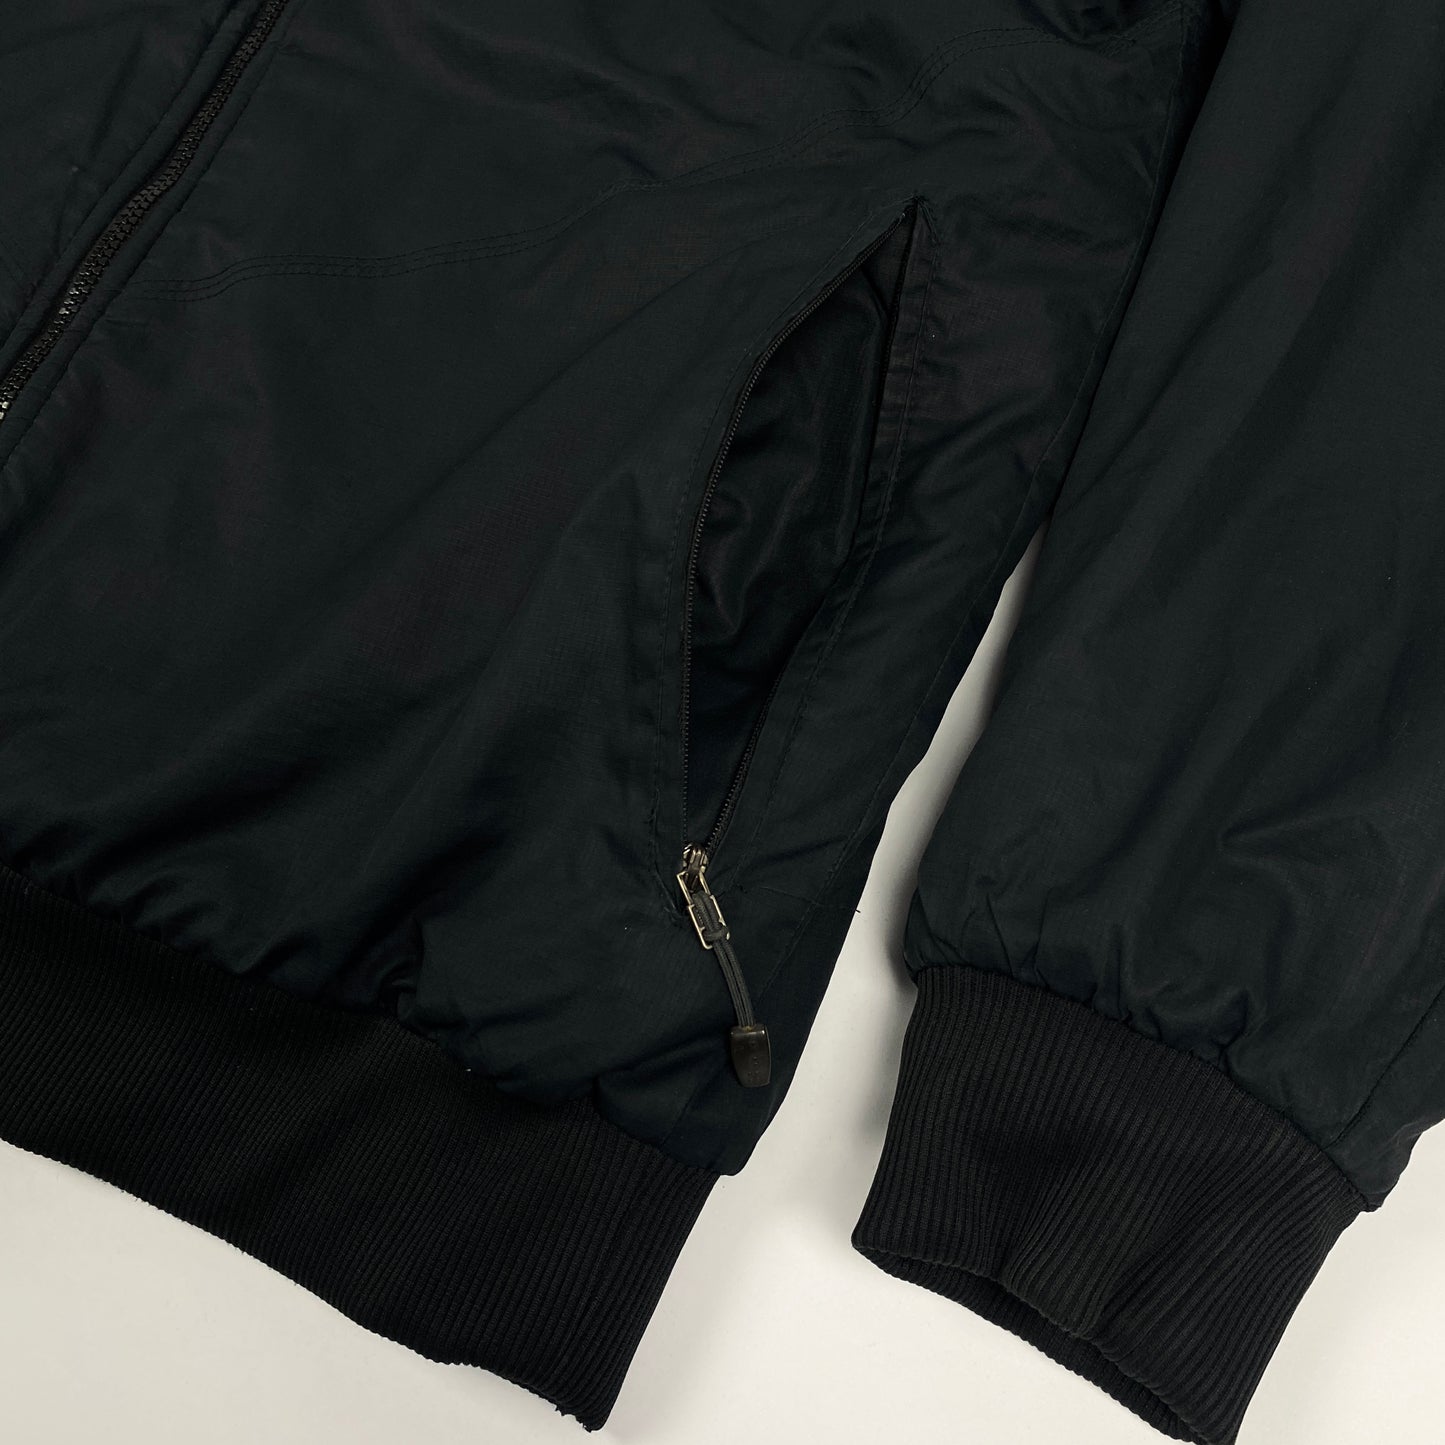 Vintage Nike ACG Reversilbe Fleece Jacket / Jacke